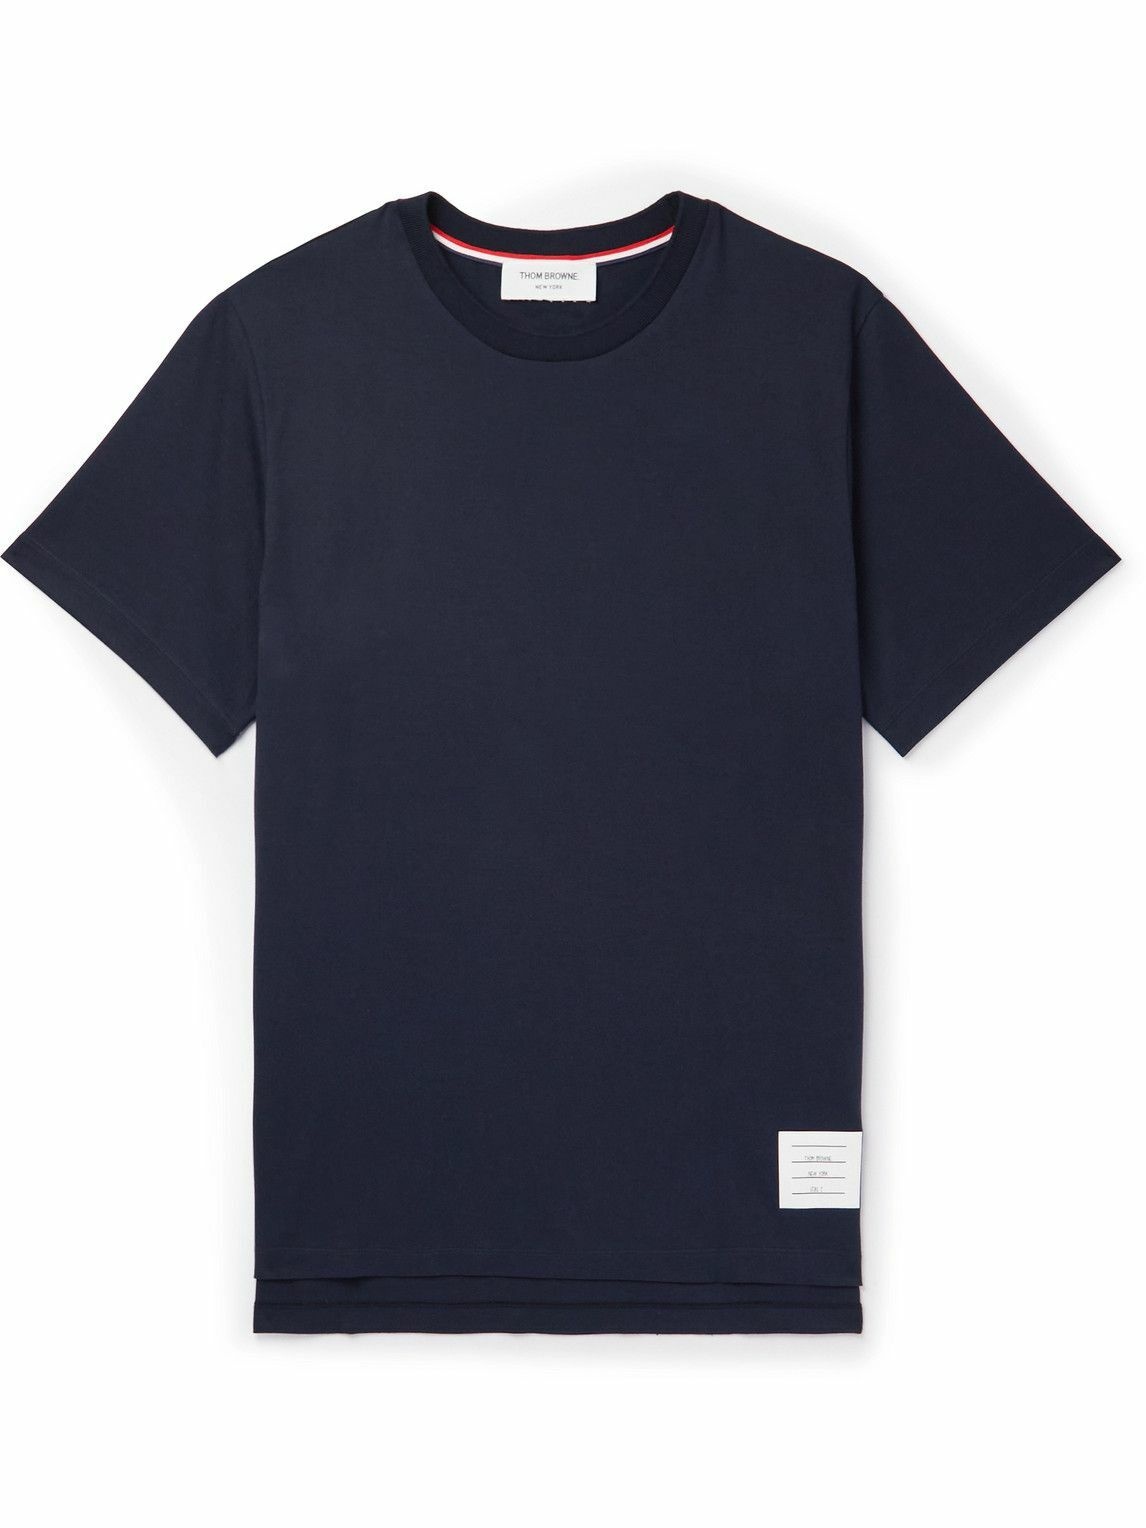 Thom Browne - Logo-Appliquéd Cotton-Jersey T-Shirt - Blue Thom Browne